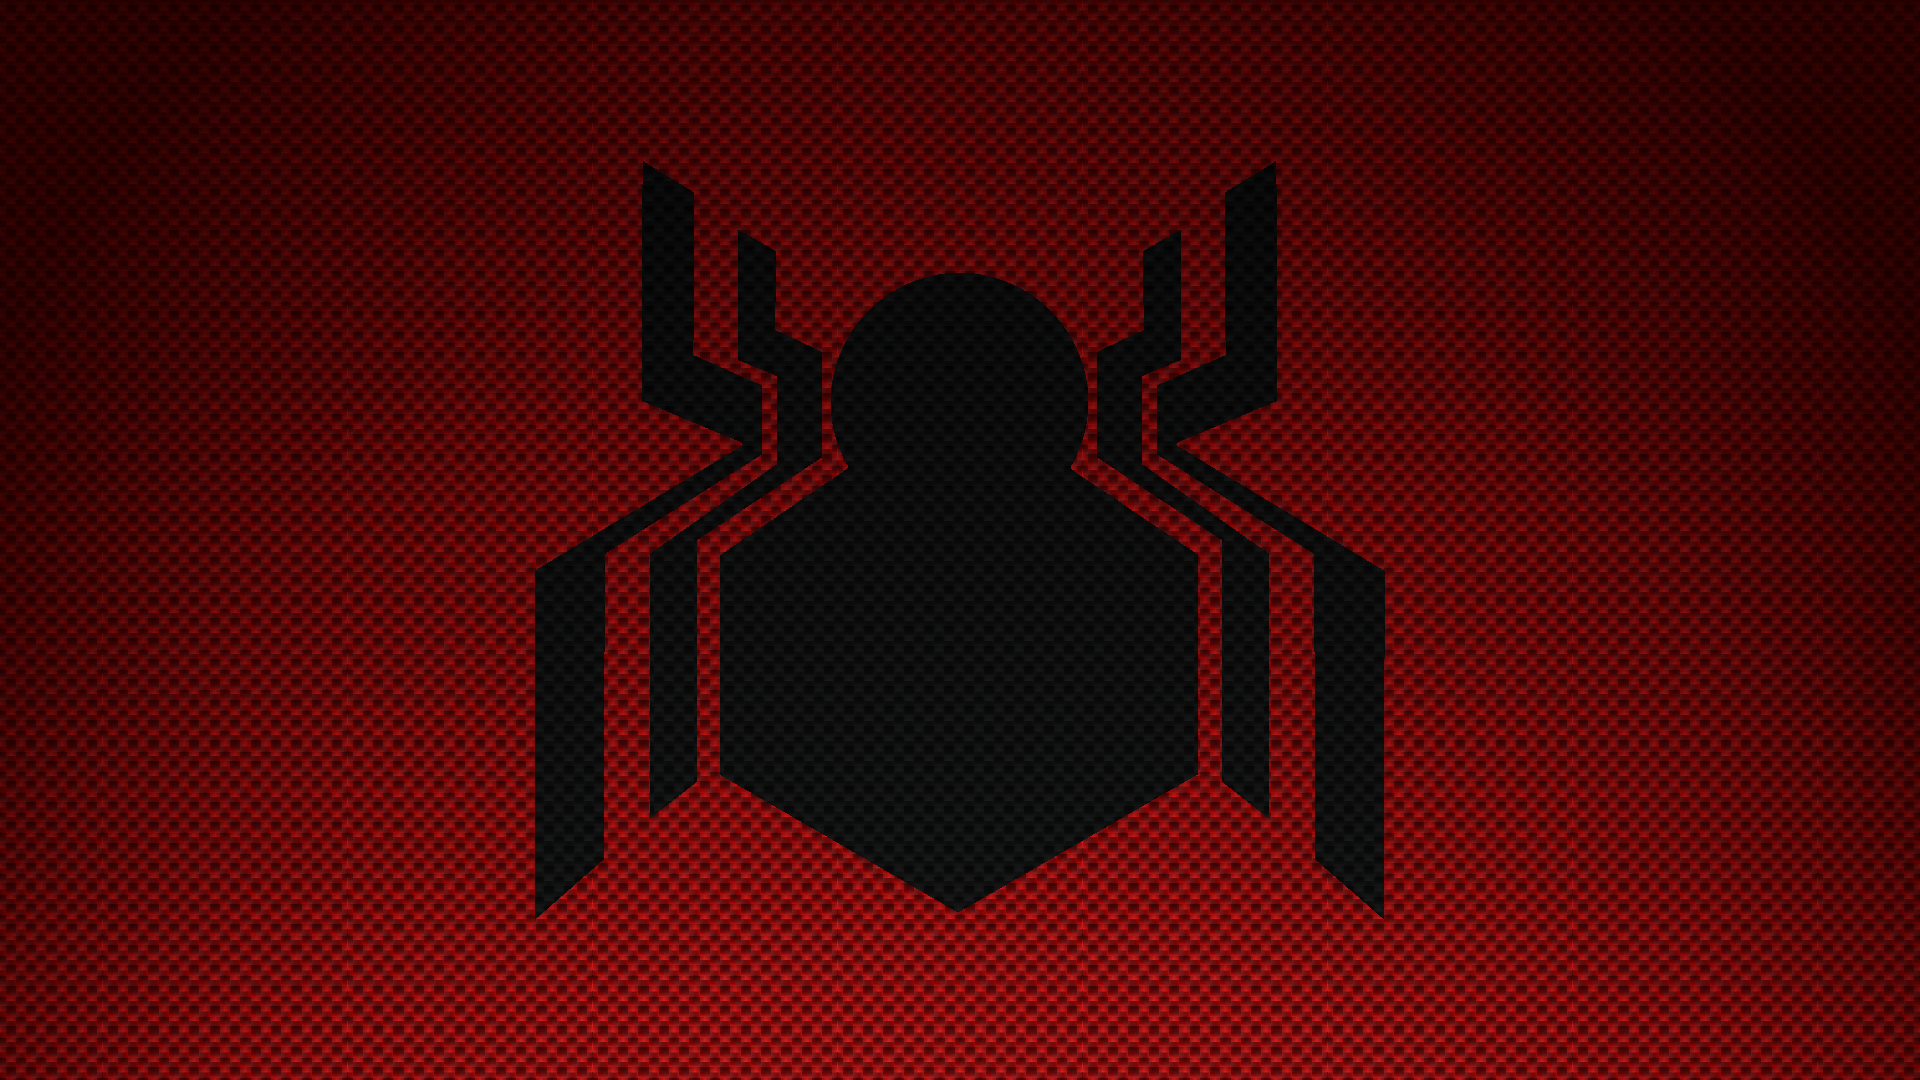 1920x1080 Made A Simple MCU Spider Man Logo Hình nền: Marvelstudios